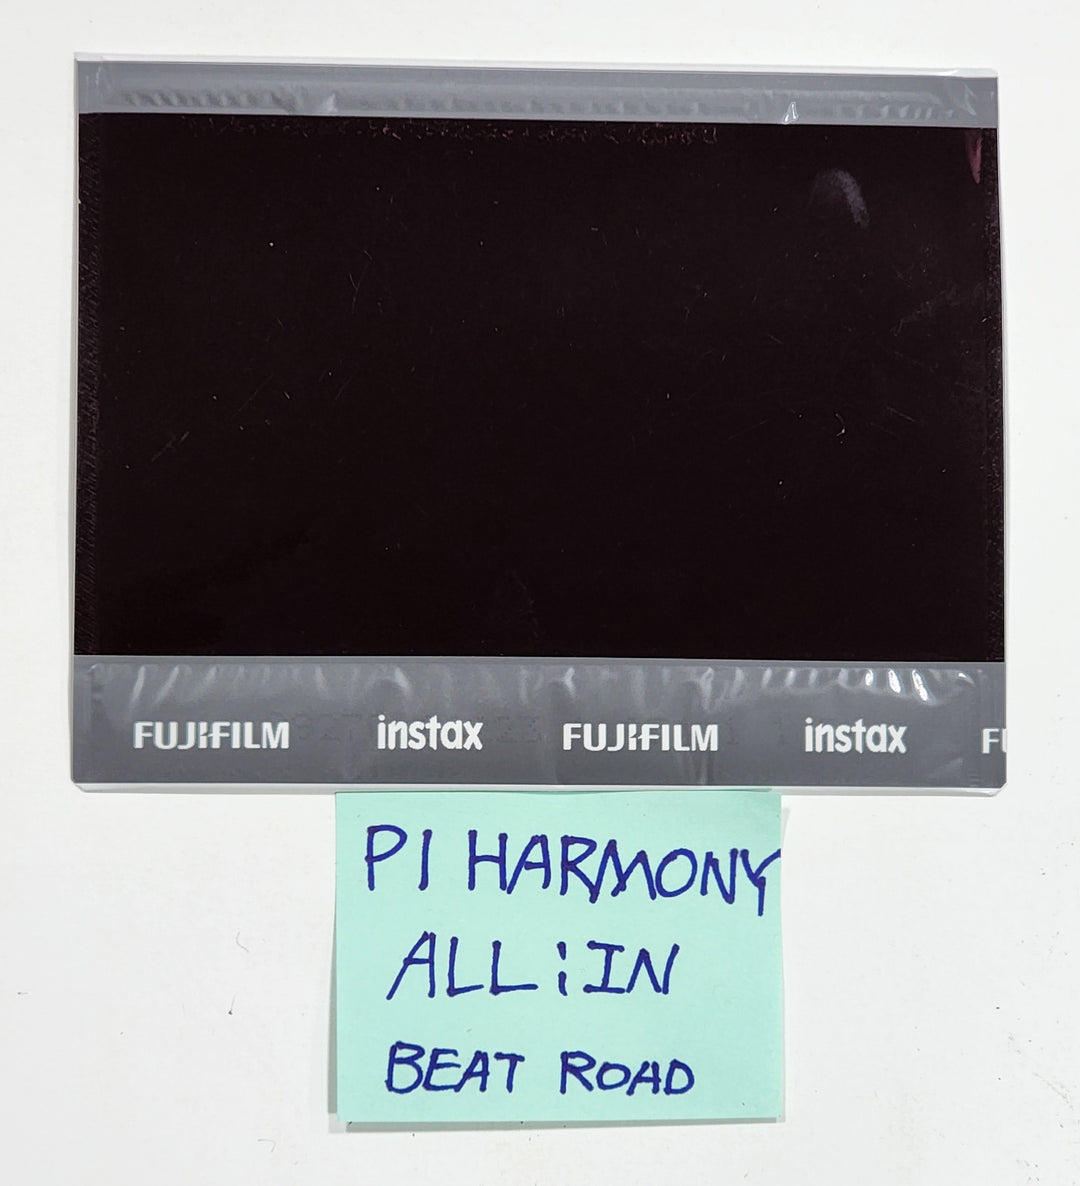 P1Harmony 'HARMONY : ALL IN' - Hand Autographed(Signed) BIG Polaroid